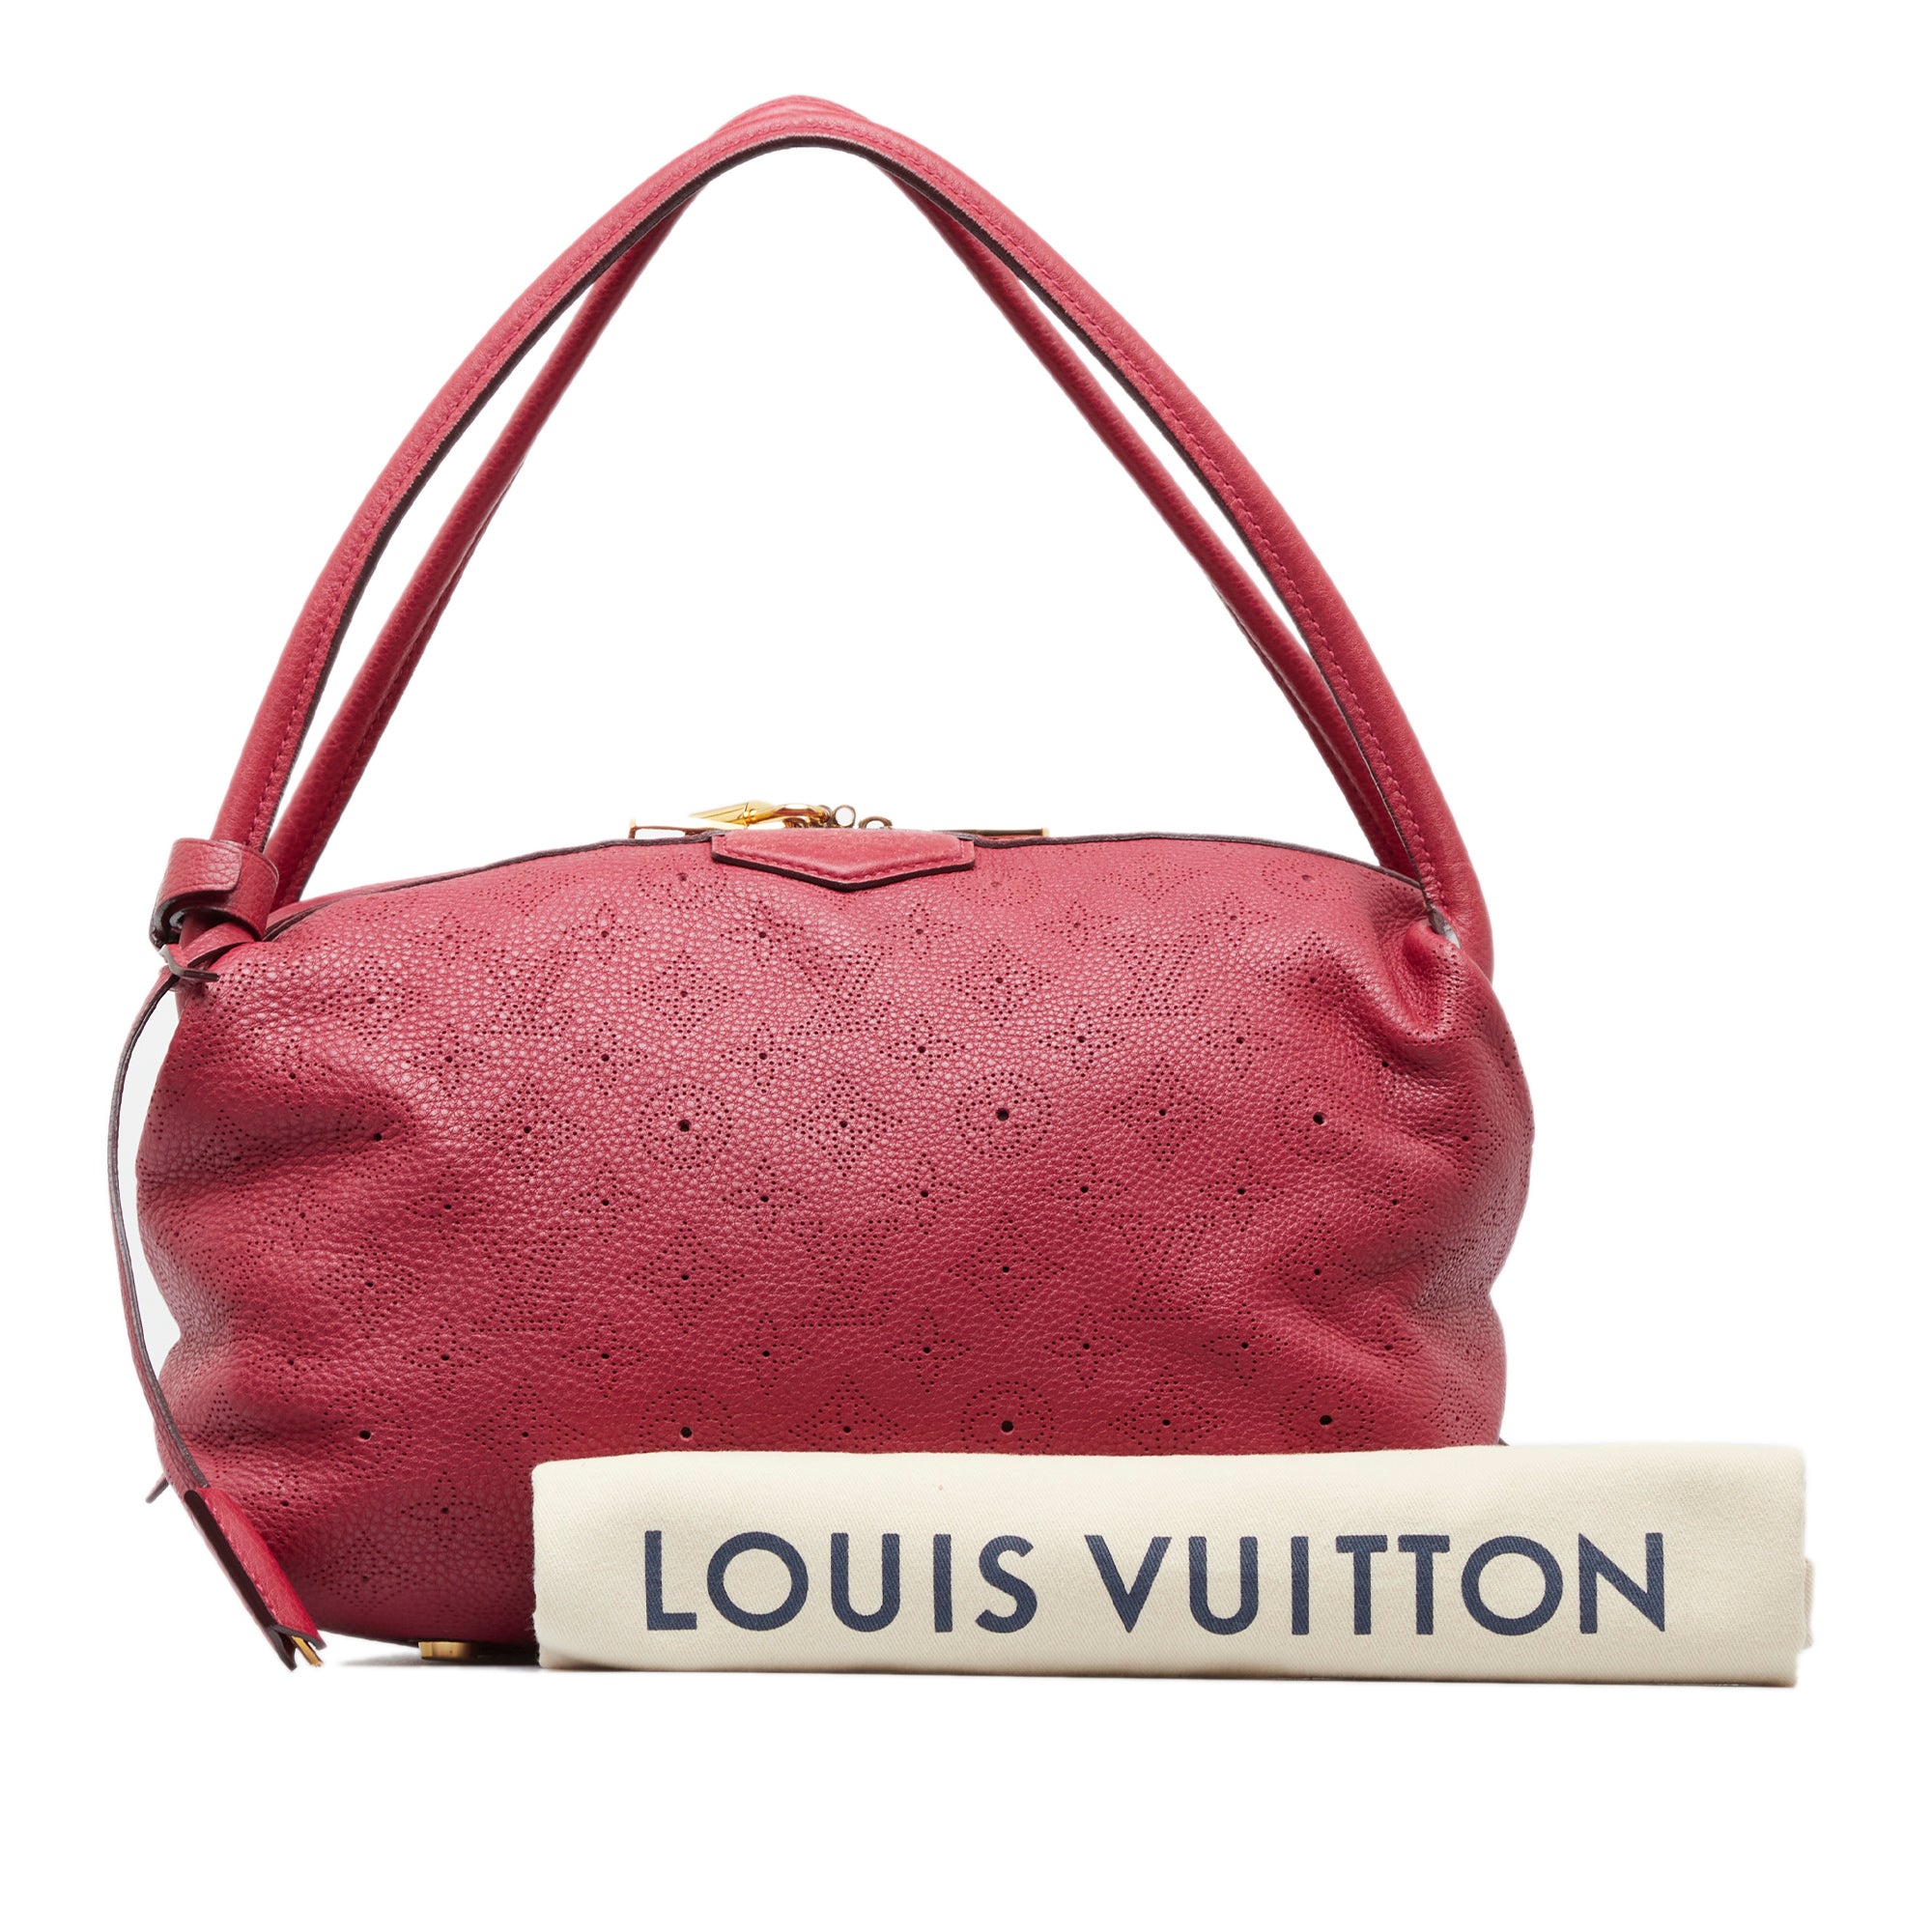 Louis Vuitton Black Monogram Mahina Leather L Bag Louis Vuitton